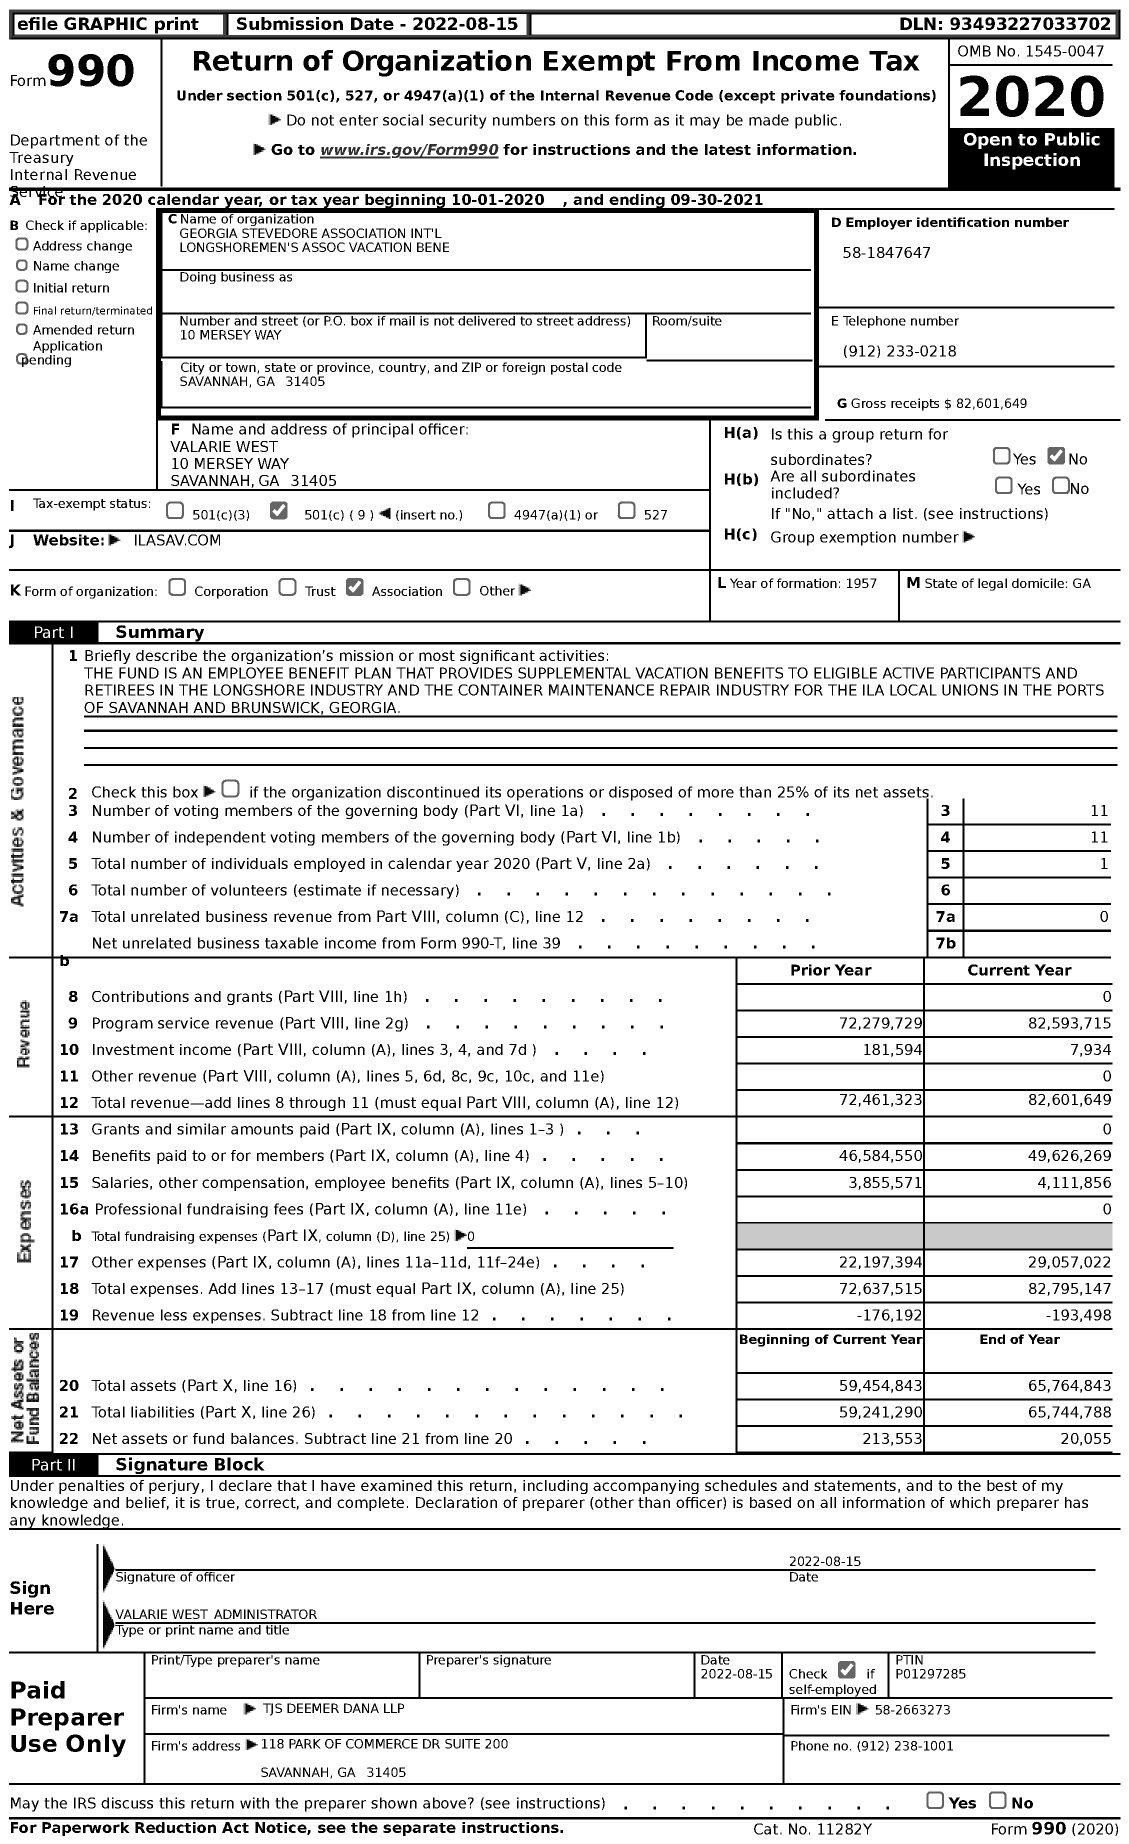 Image of first page of 2020 Form 990 for Georgia Stevedore Association International Longshoremen's Association Vacation Benefits